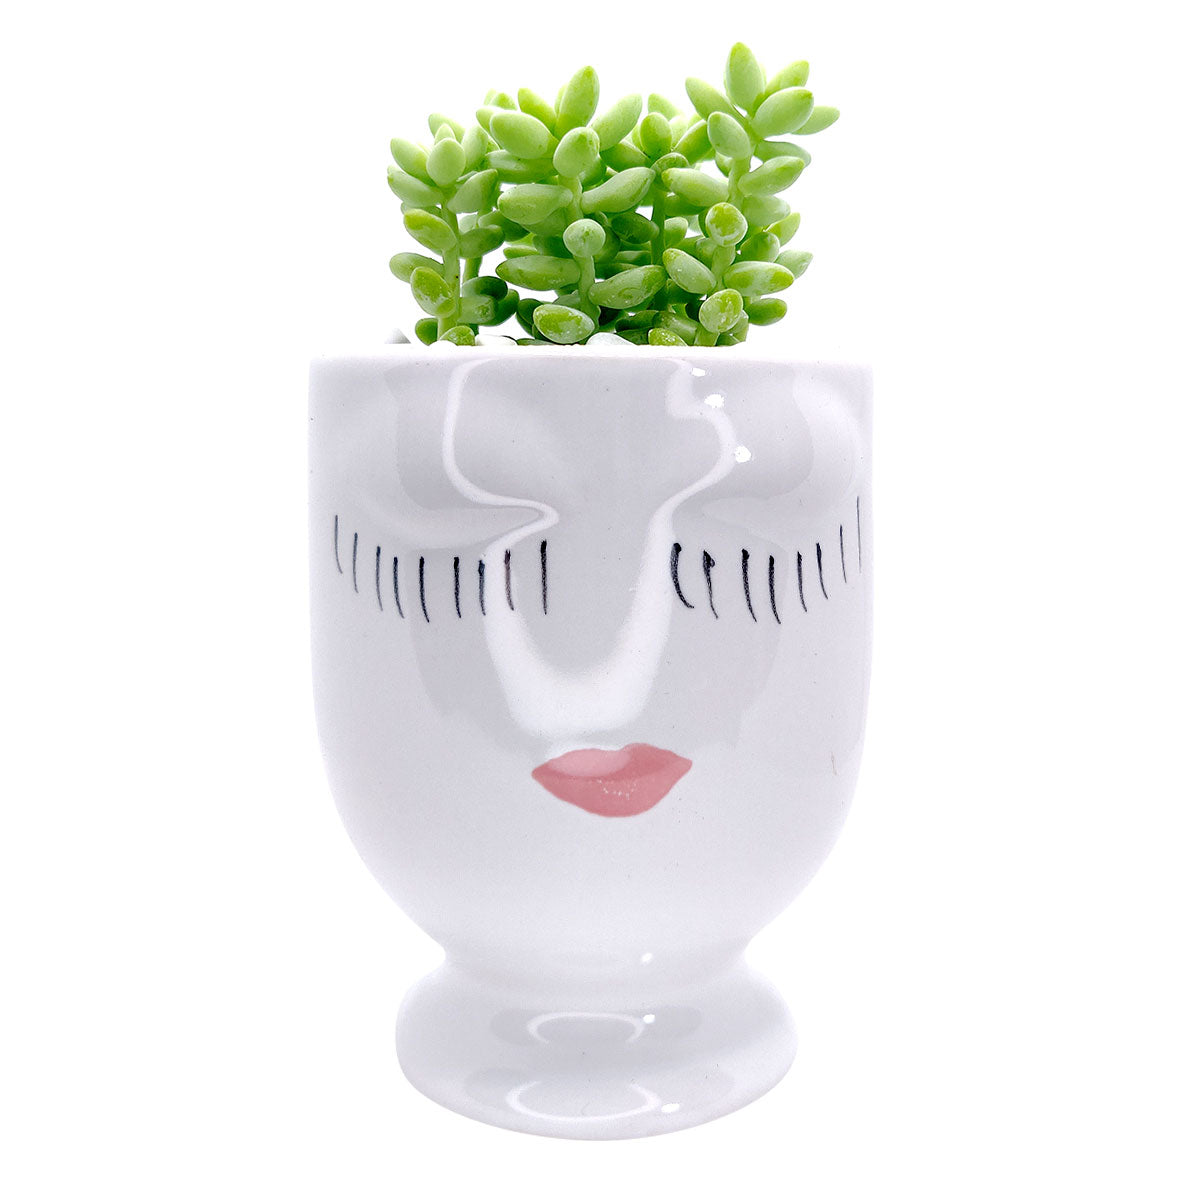 Hand-painted Pretty Lady Face Pot for sale, 4 inch pot for cactus and succulent plant, unique Artistic Lady Face Pots, modern home decor ideas, small ceramic pot for succulent, succulent gift ideas for women